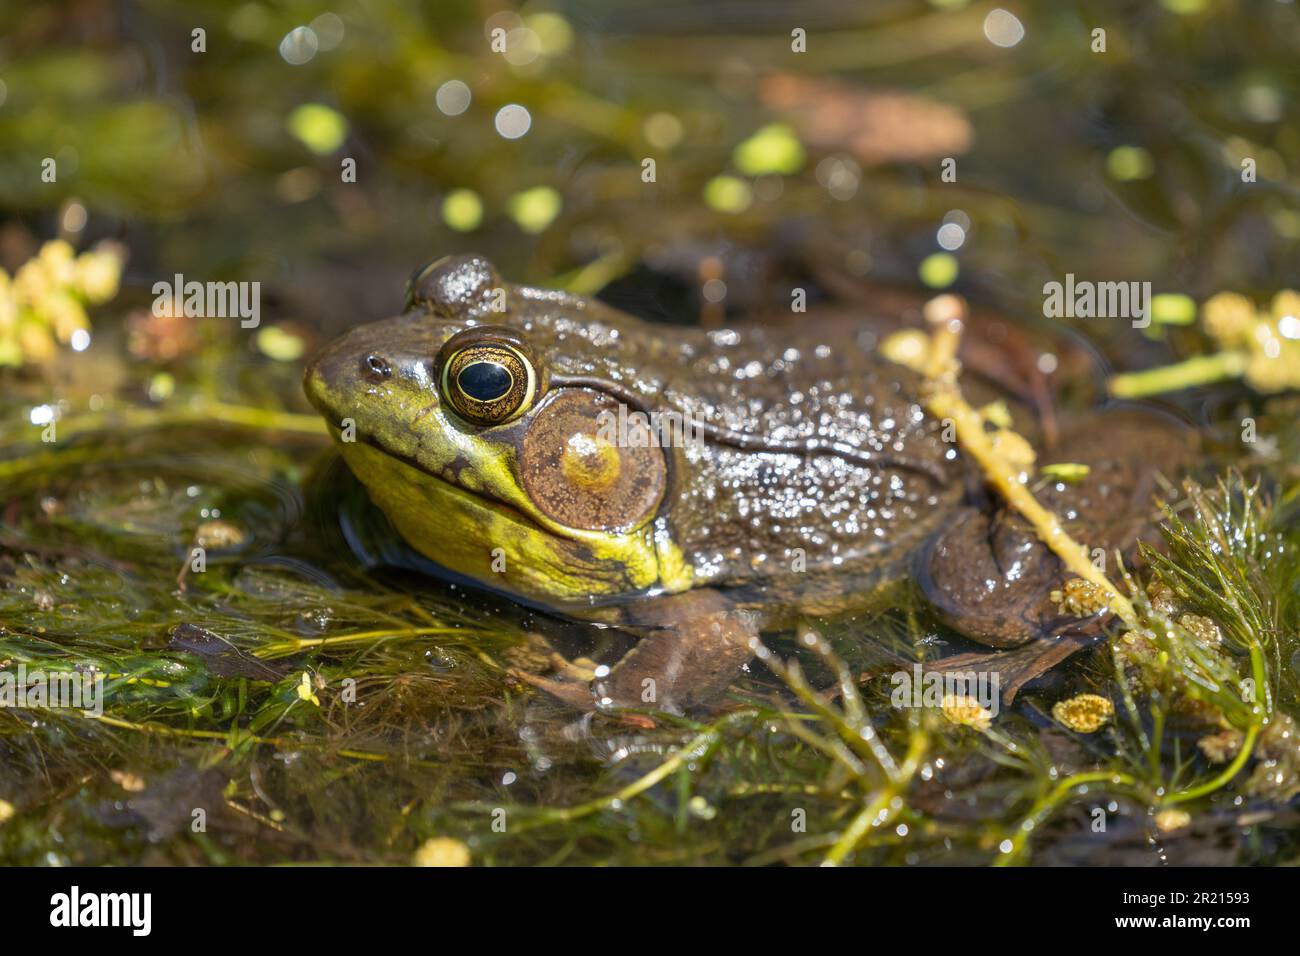 American bullfrog (Lithobates catesbeianus) in pond close-up portrait. Stock Photo